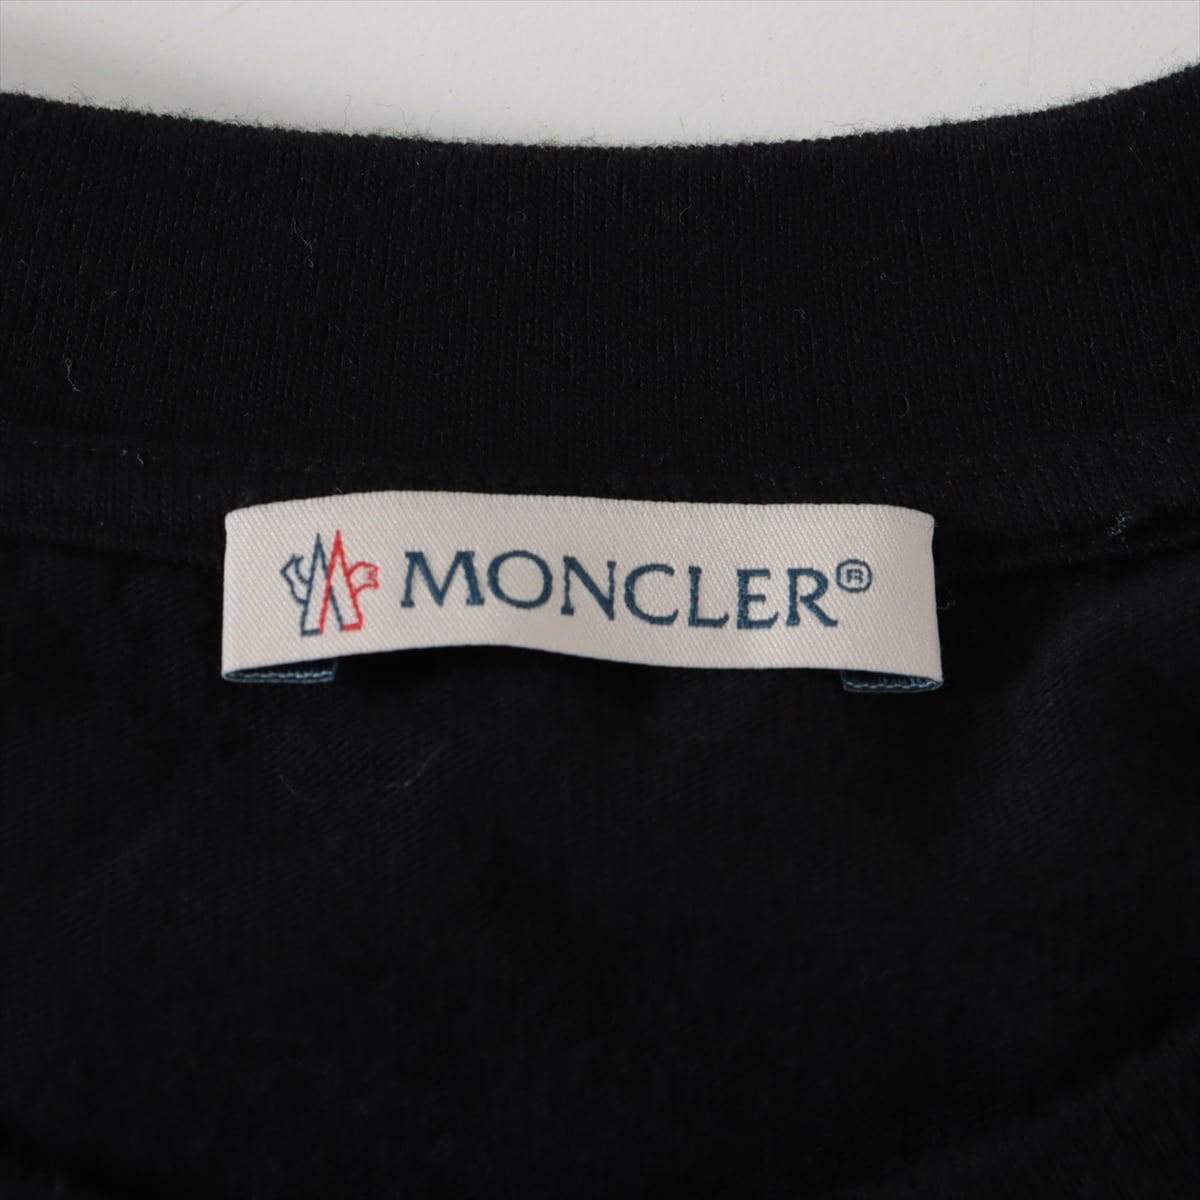 Moncler Genius Fragment 18 years Cotton T-shirt S Men's Black